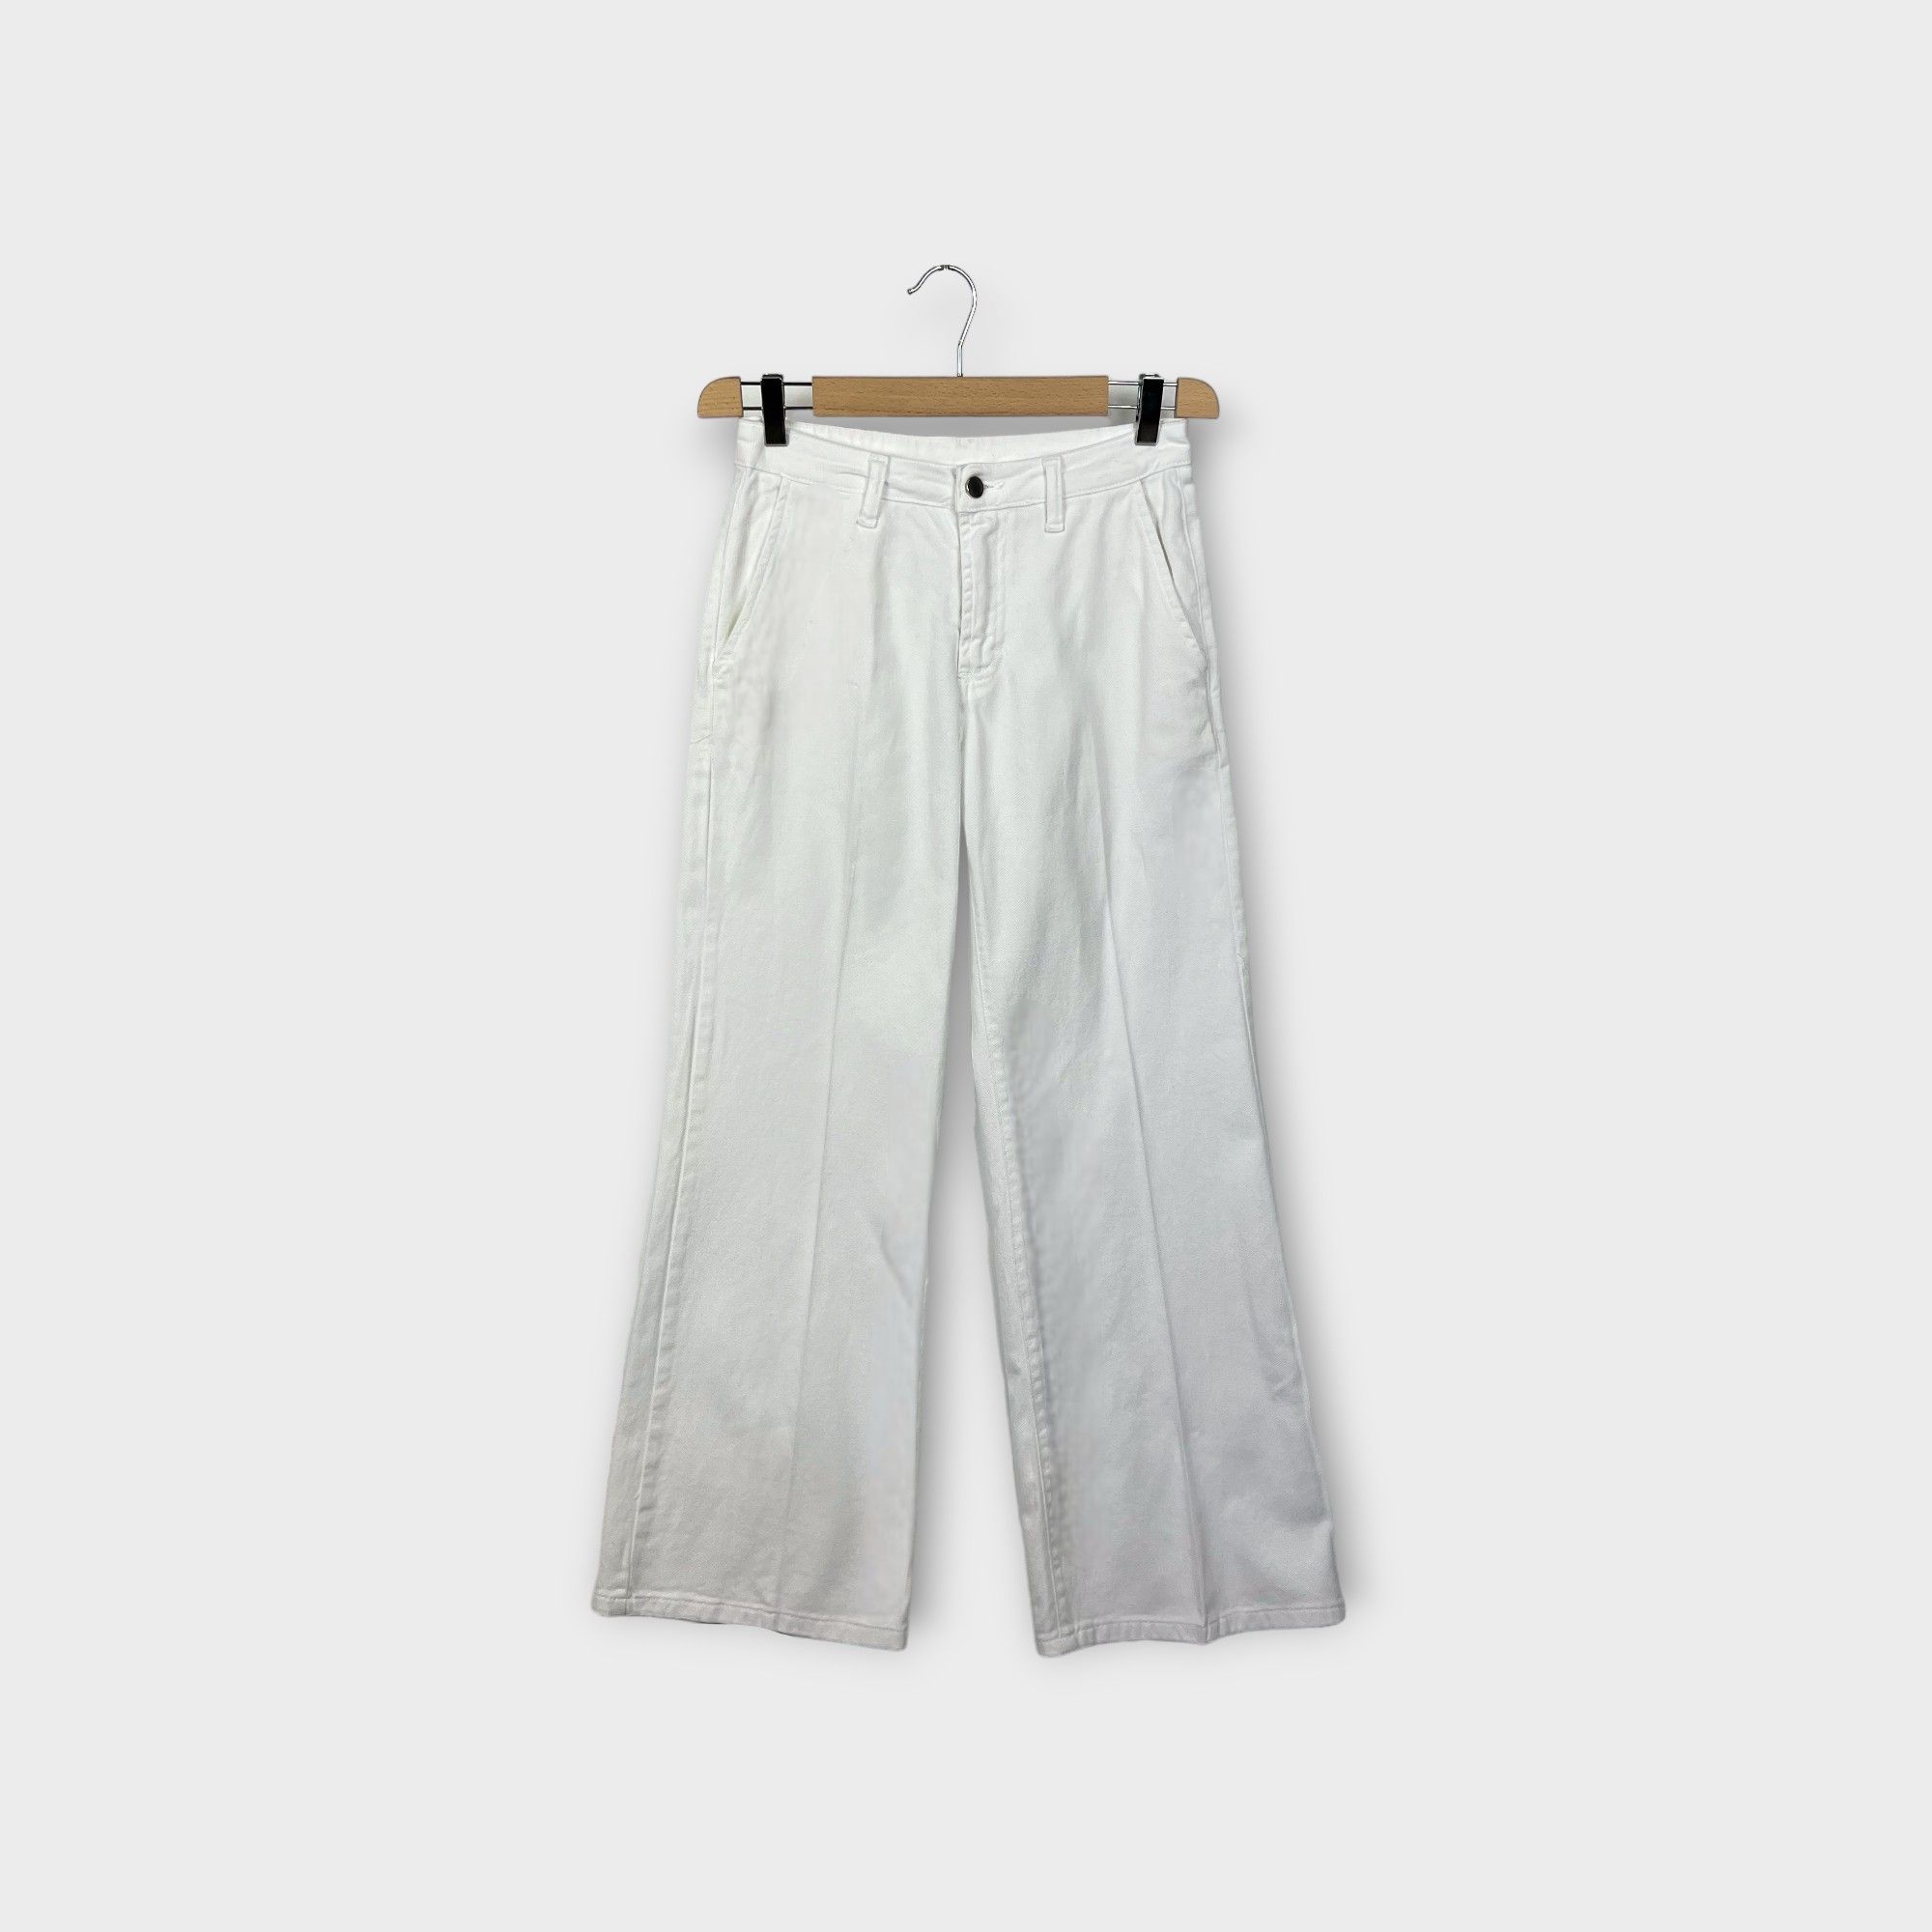 images/virtuemart/product/HELLEH Pantaloni donna modello palazzo in tela Bull di cotone colore bianco 1.jpg